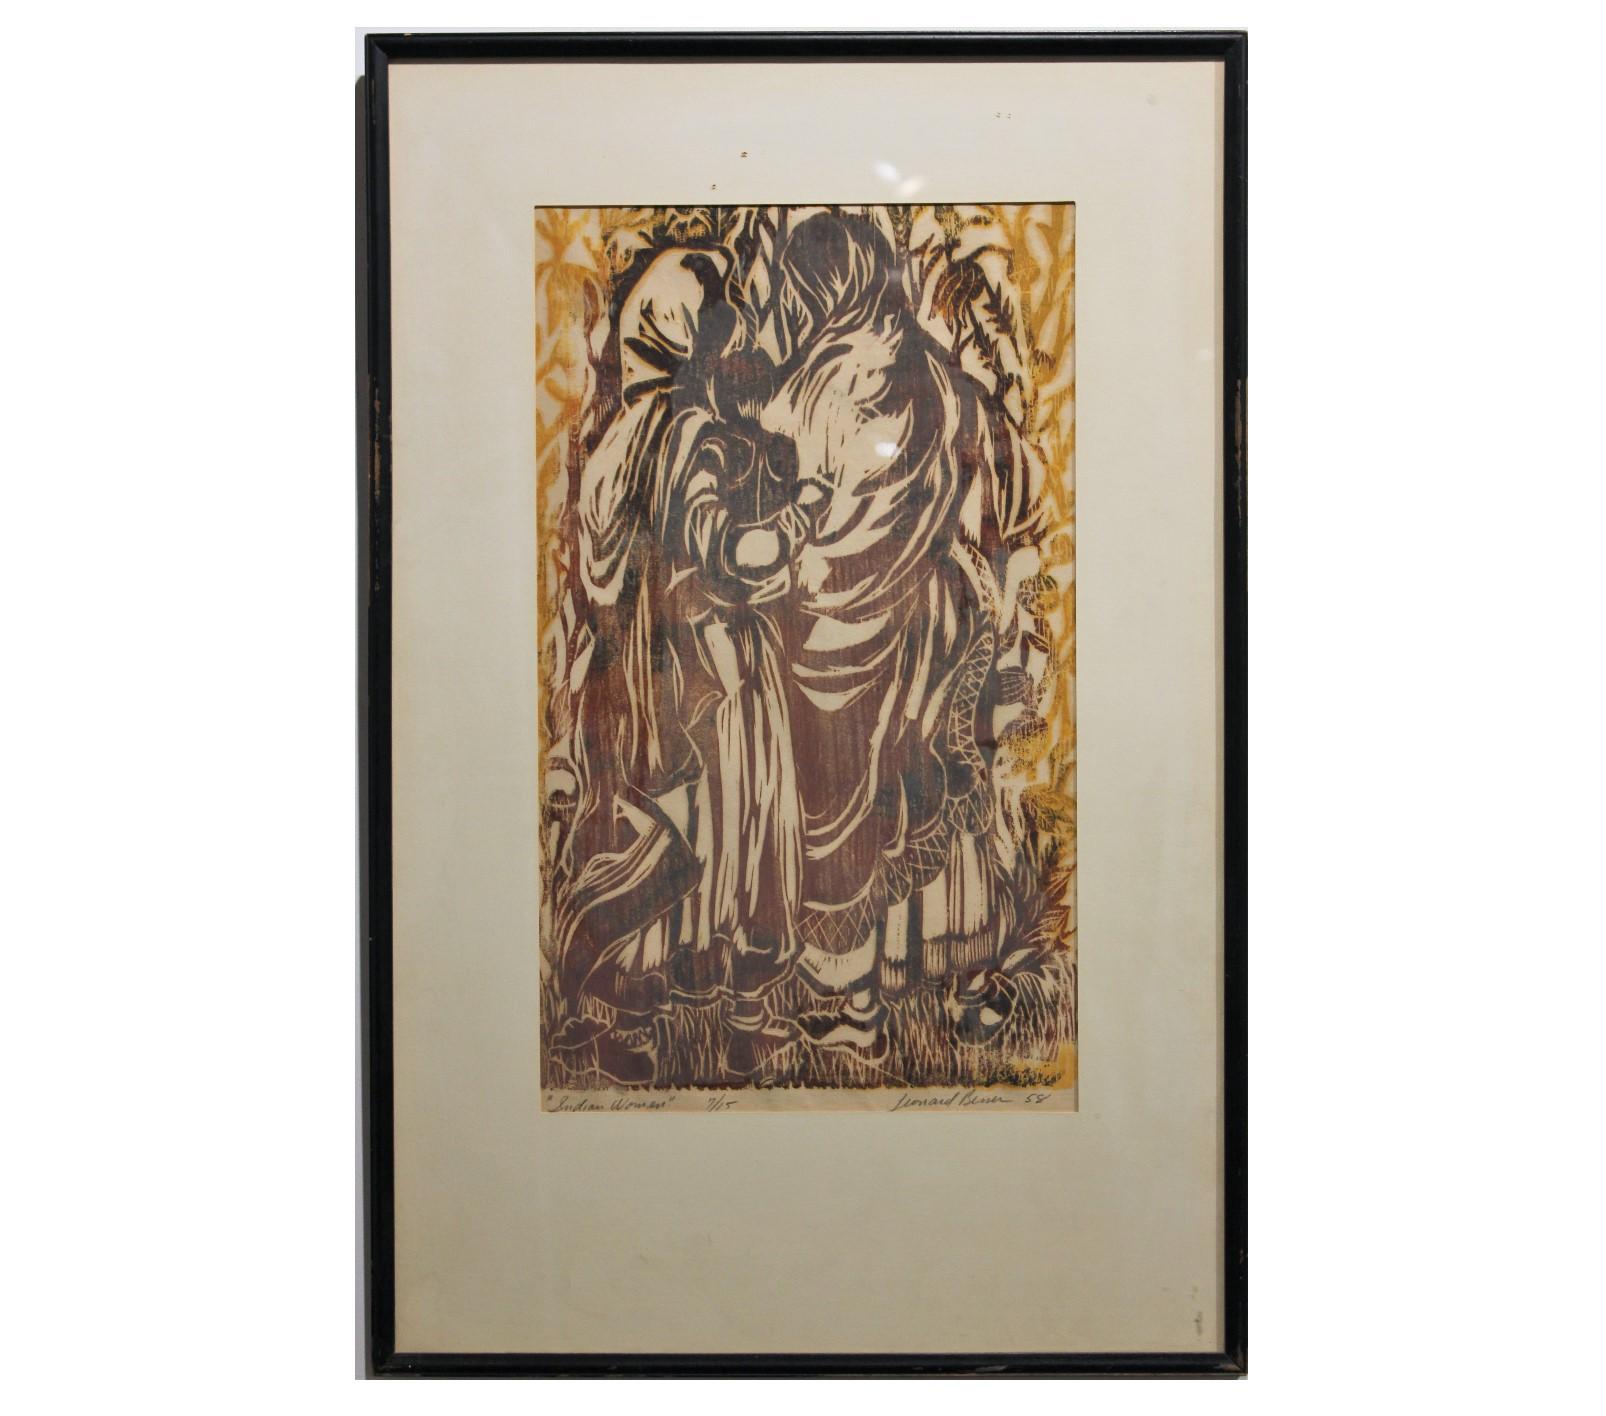 Leonard Besser Abstract Print - "Indian Women" Brown Tonal Lithograph Edition 7 of 15